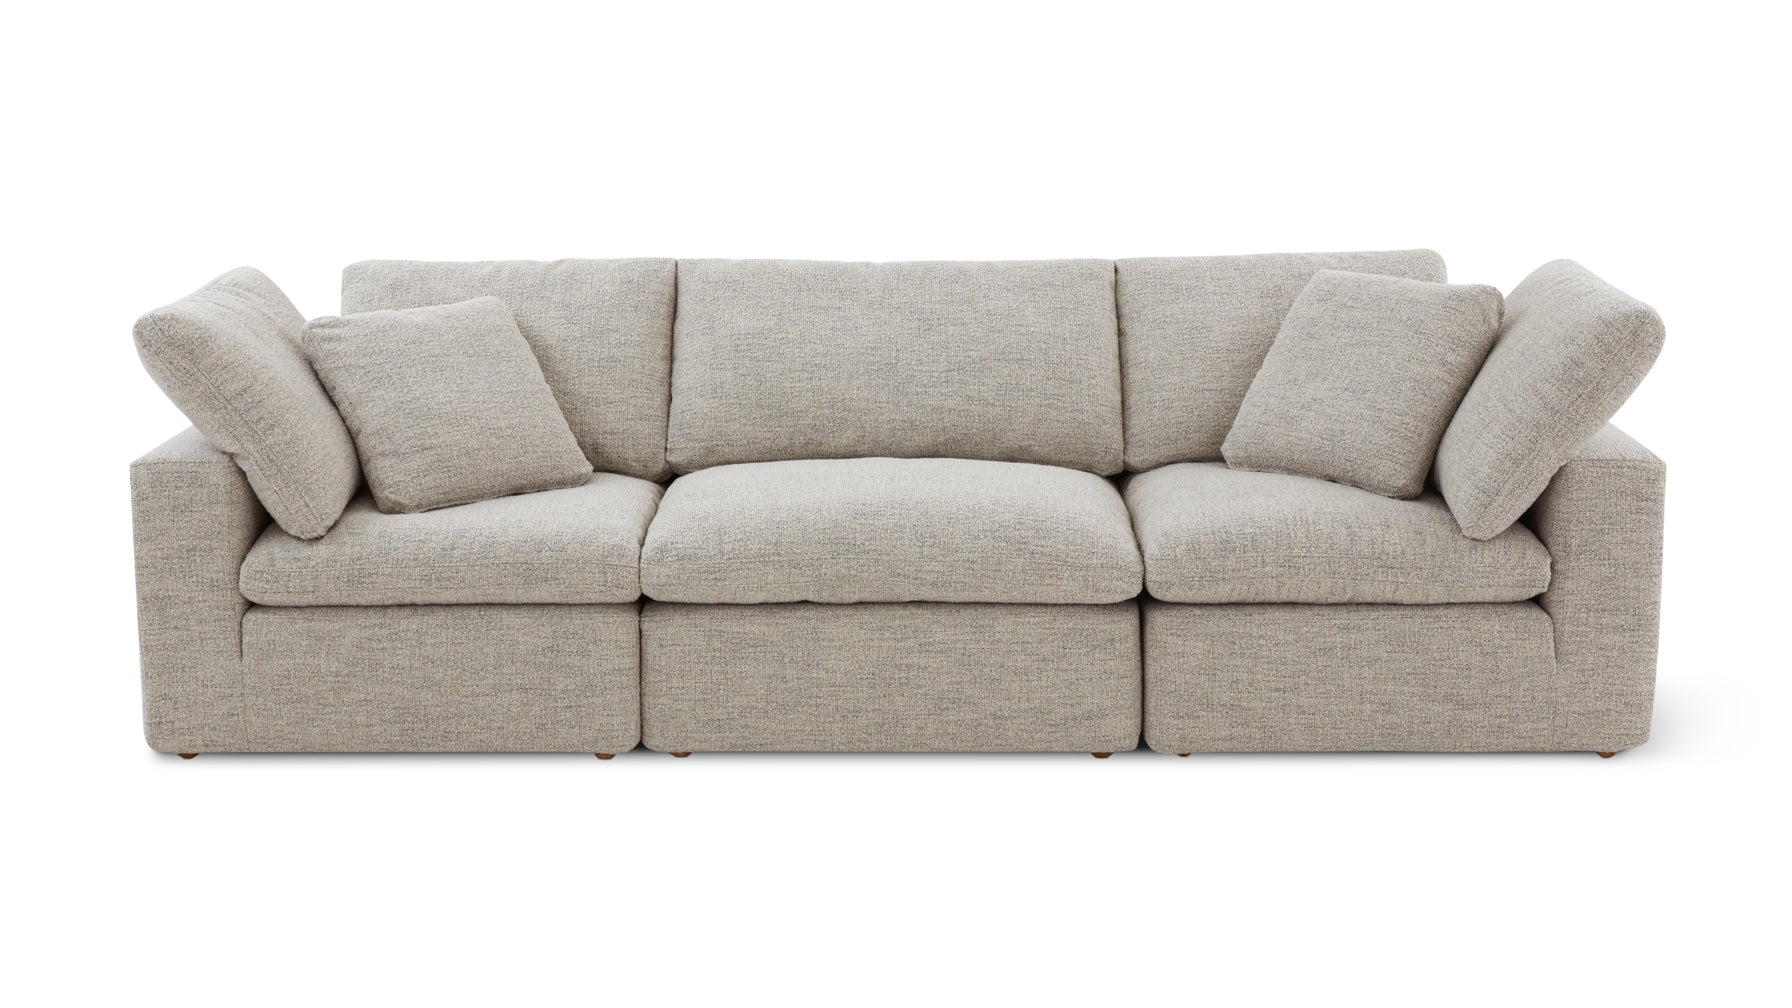 Movie Night™ 3-Piece Modular Sofa, Large, Oatmeal - Image 1